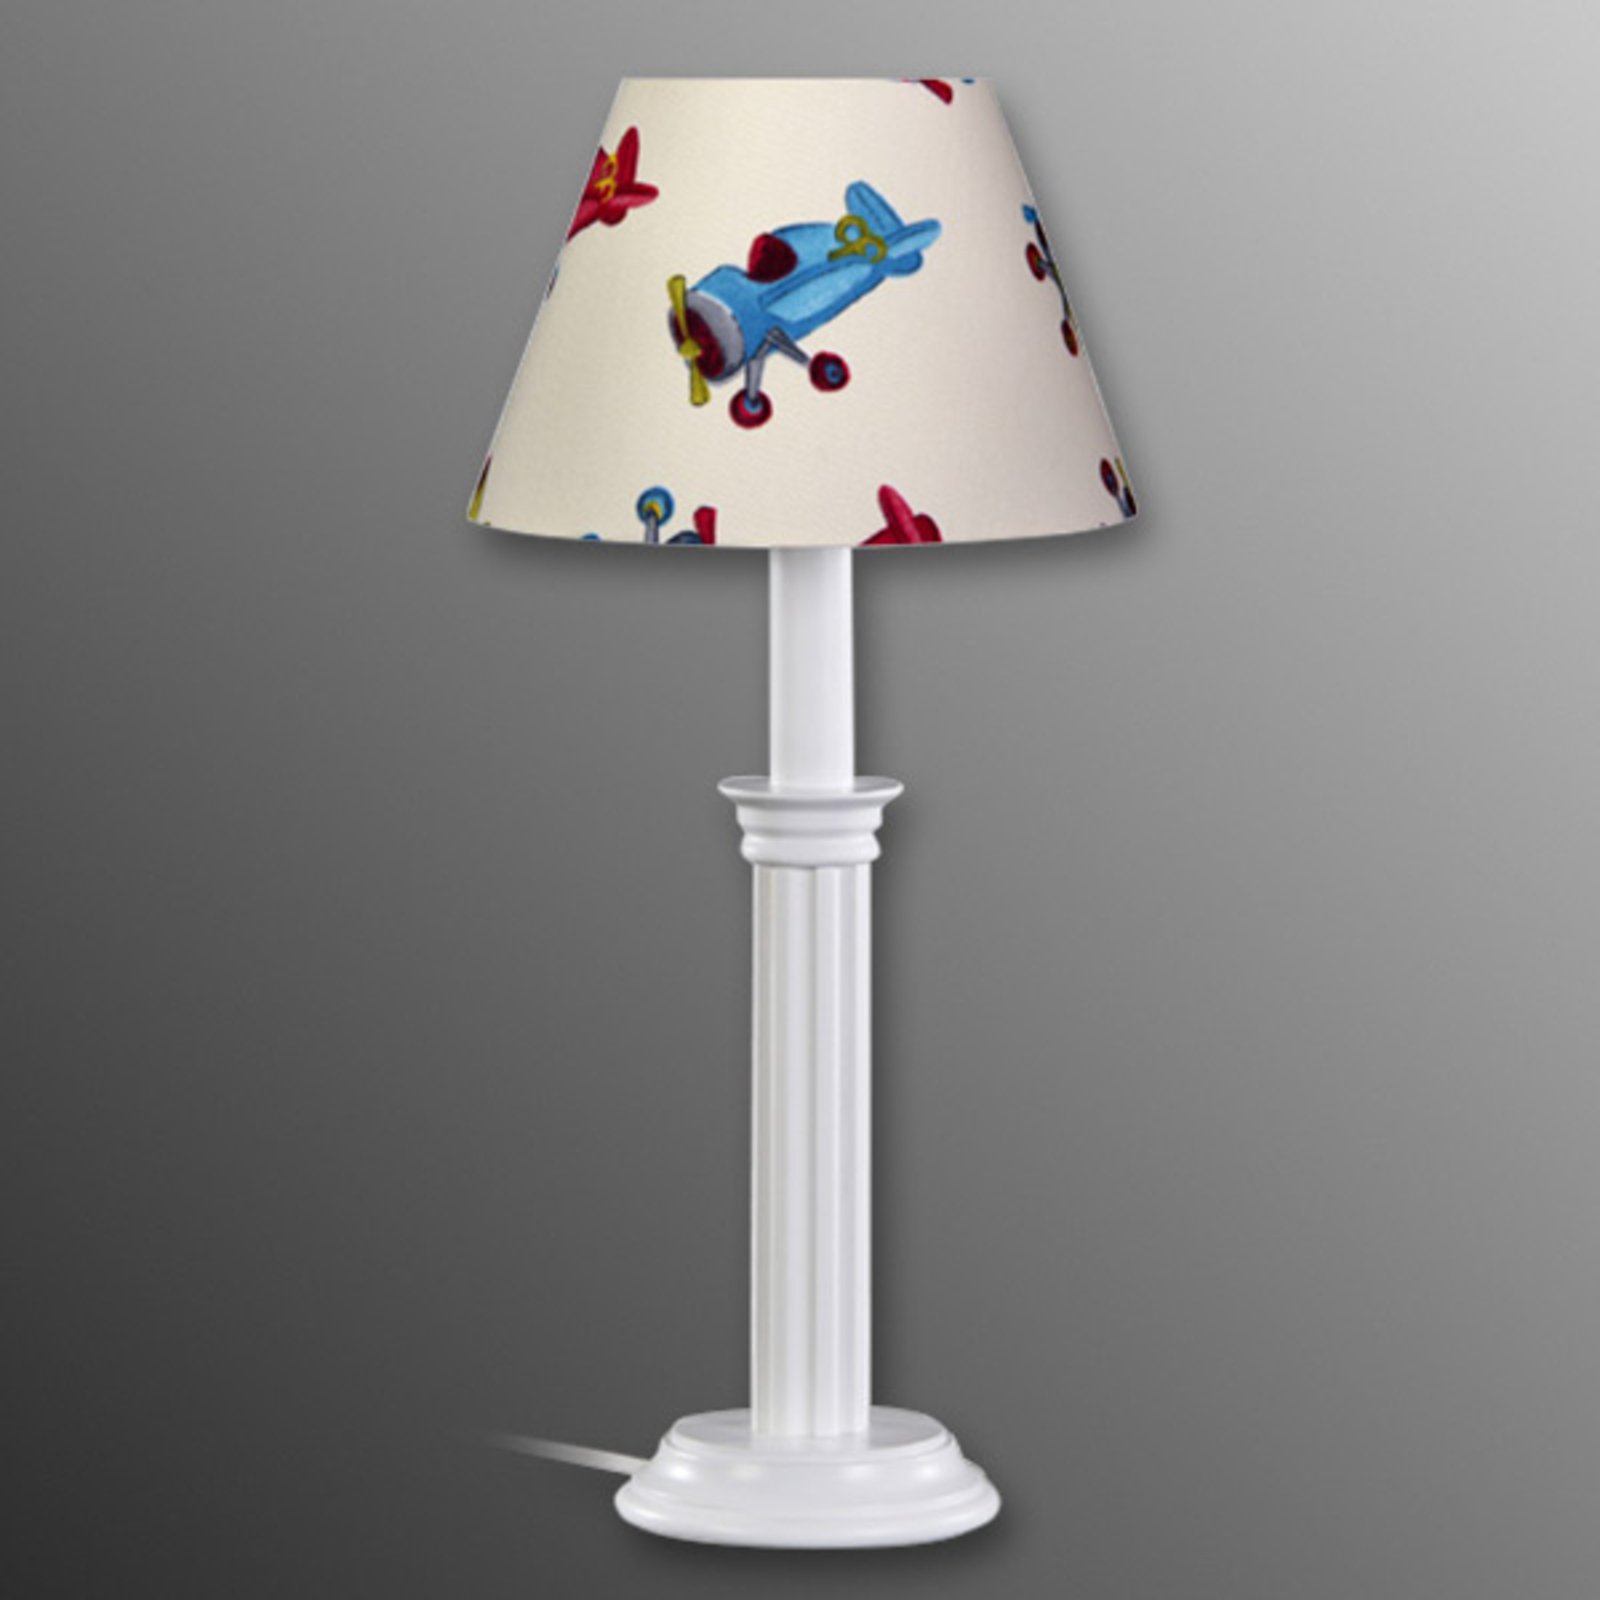 Fabric table lamp FLUGZEUGE